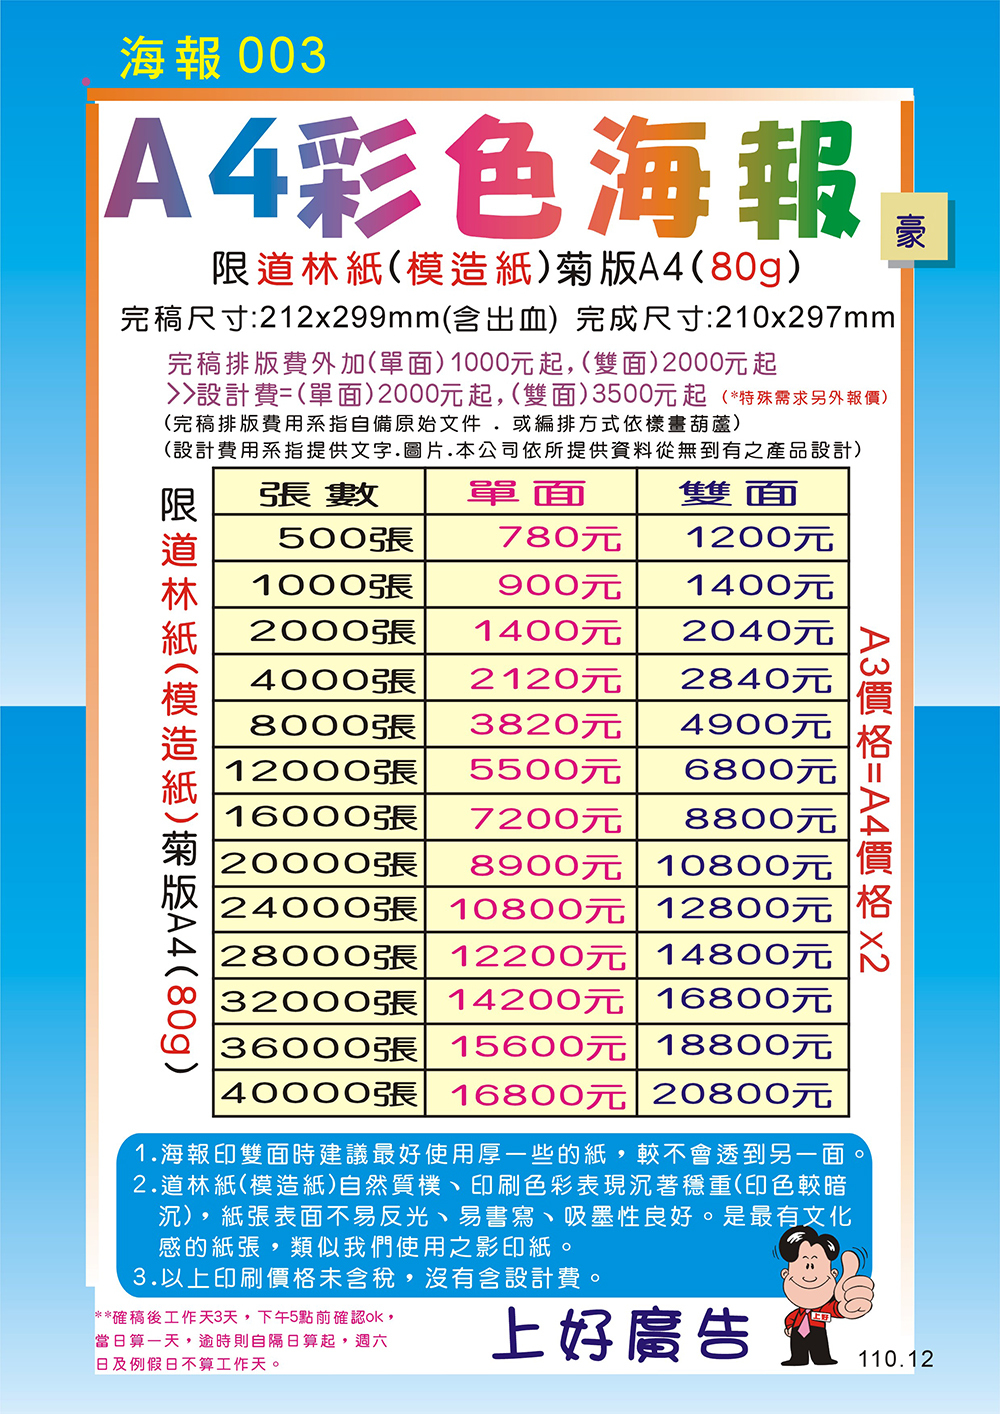 new 003-A4彩色海報-道林紙(模造紙)-80g-價格表